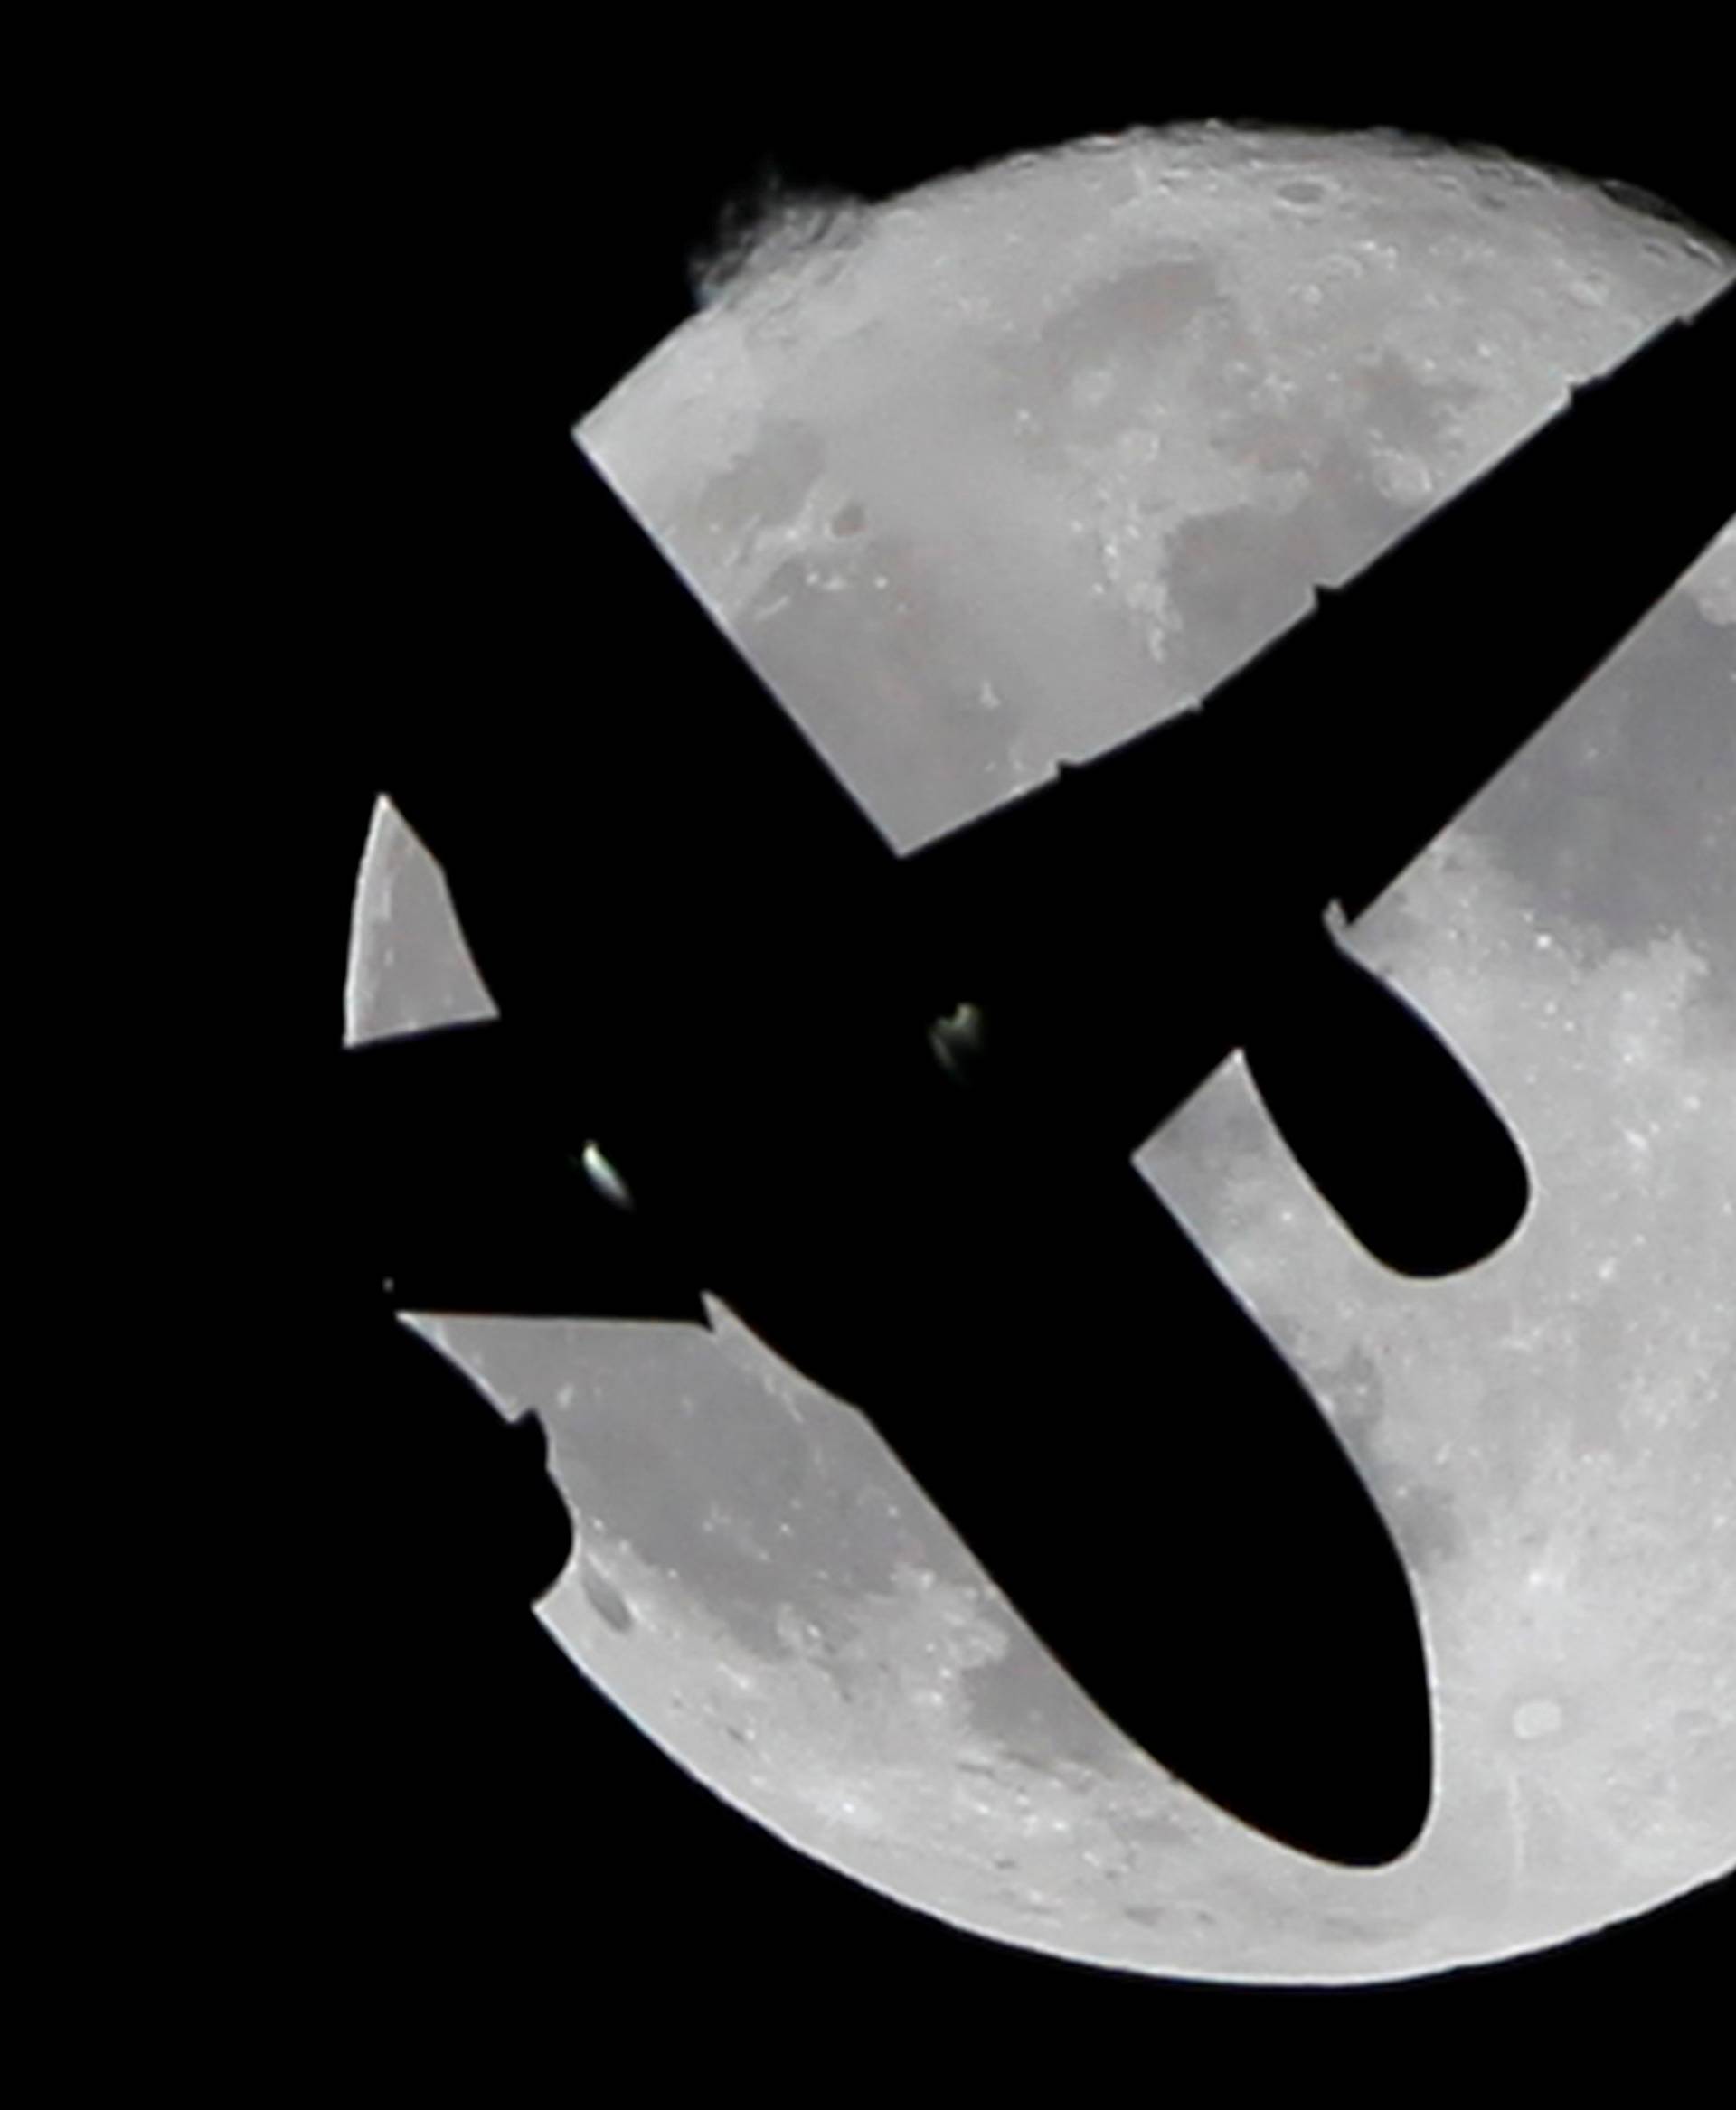 A Vueling passenger aircraft flies past a super moon in Ardales